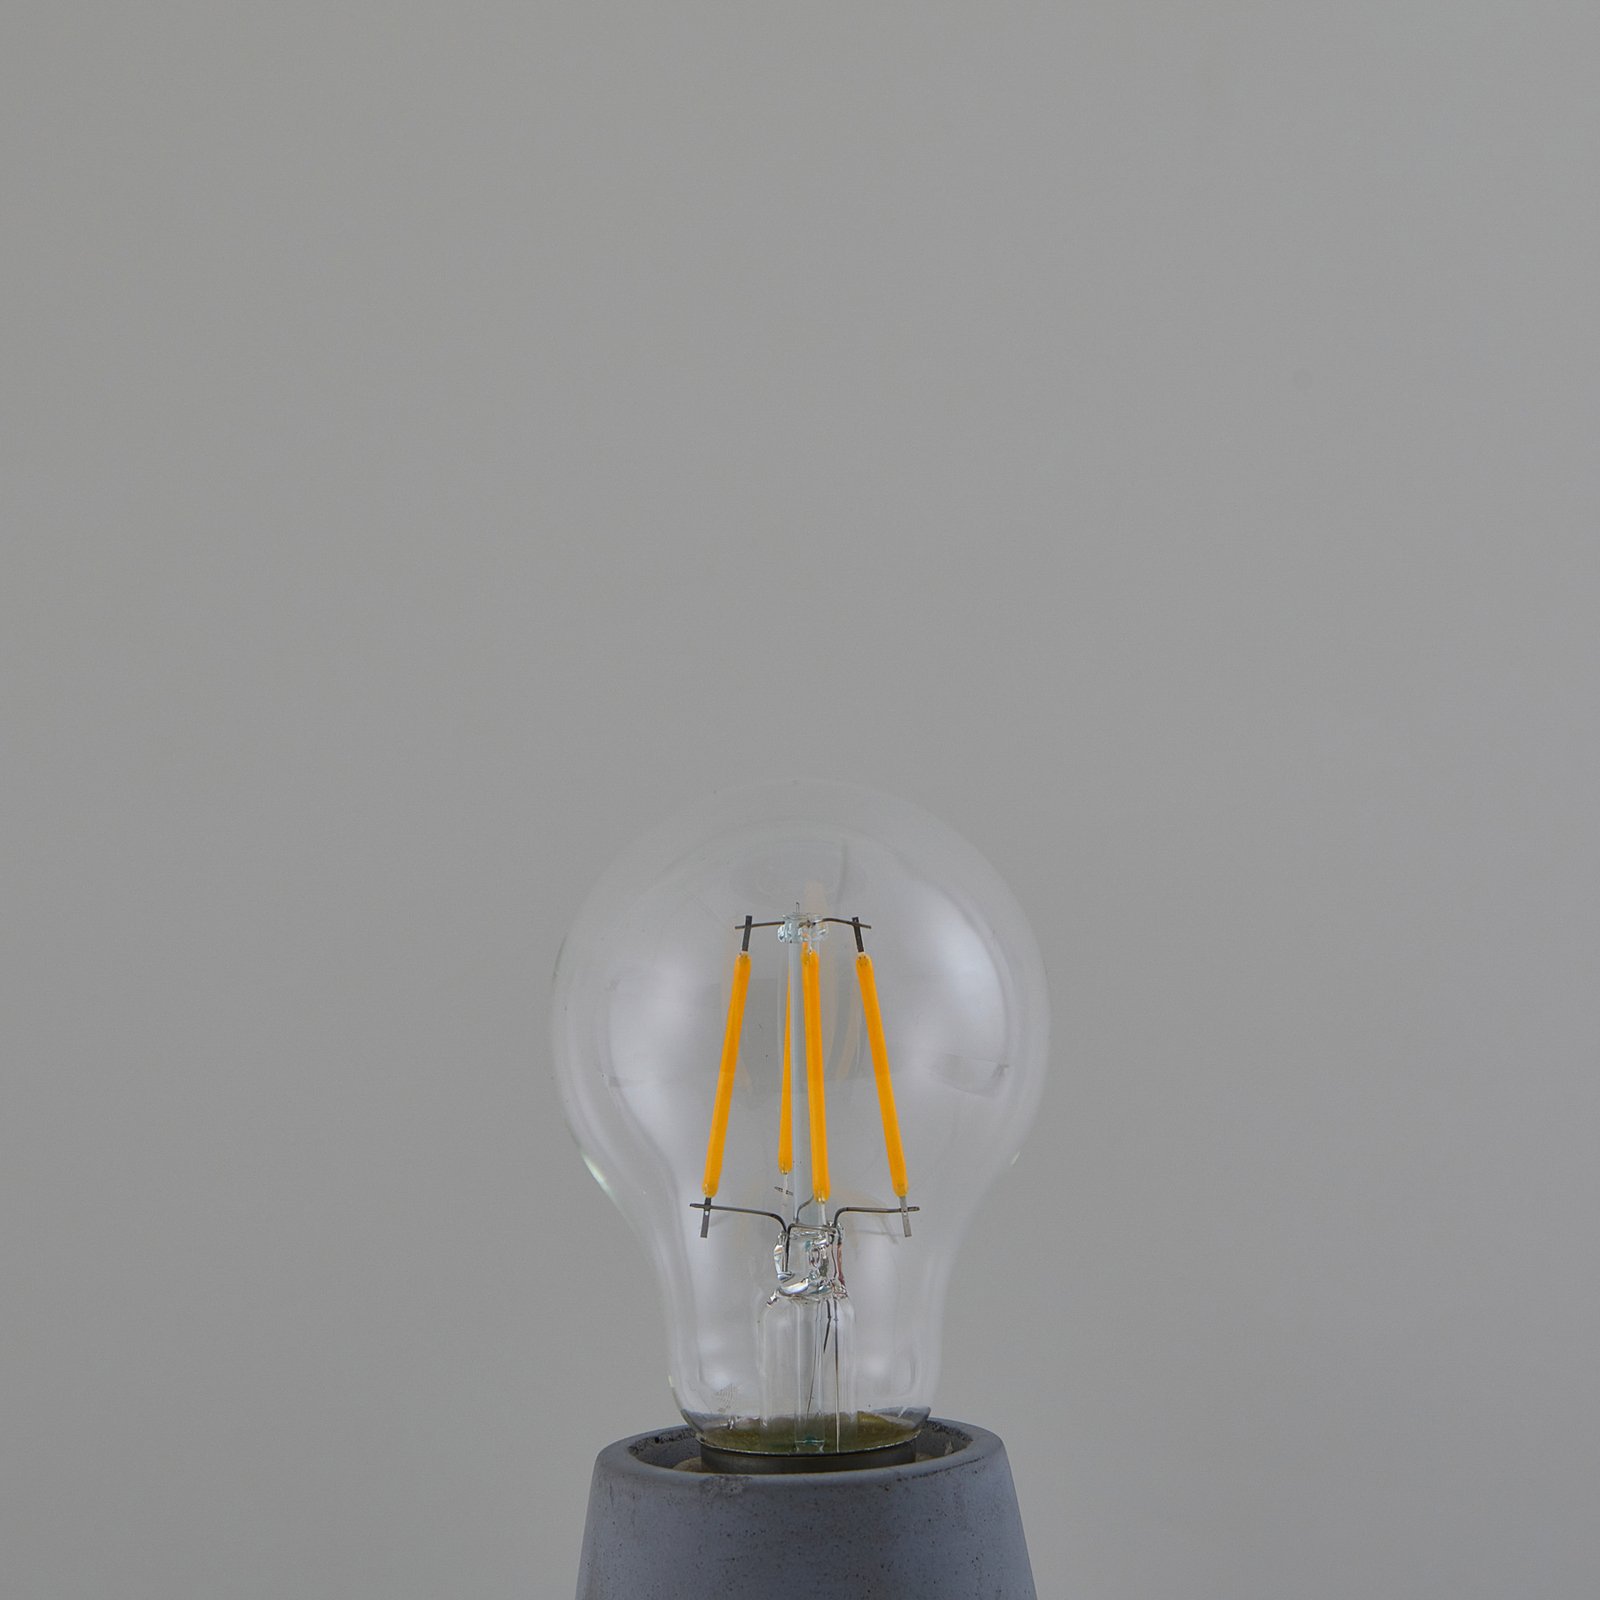 LED filament lamp, helder, E27, 7,2W, 2700K, 1521 lm